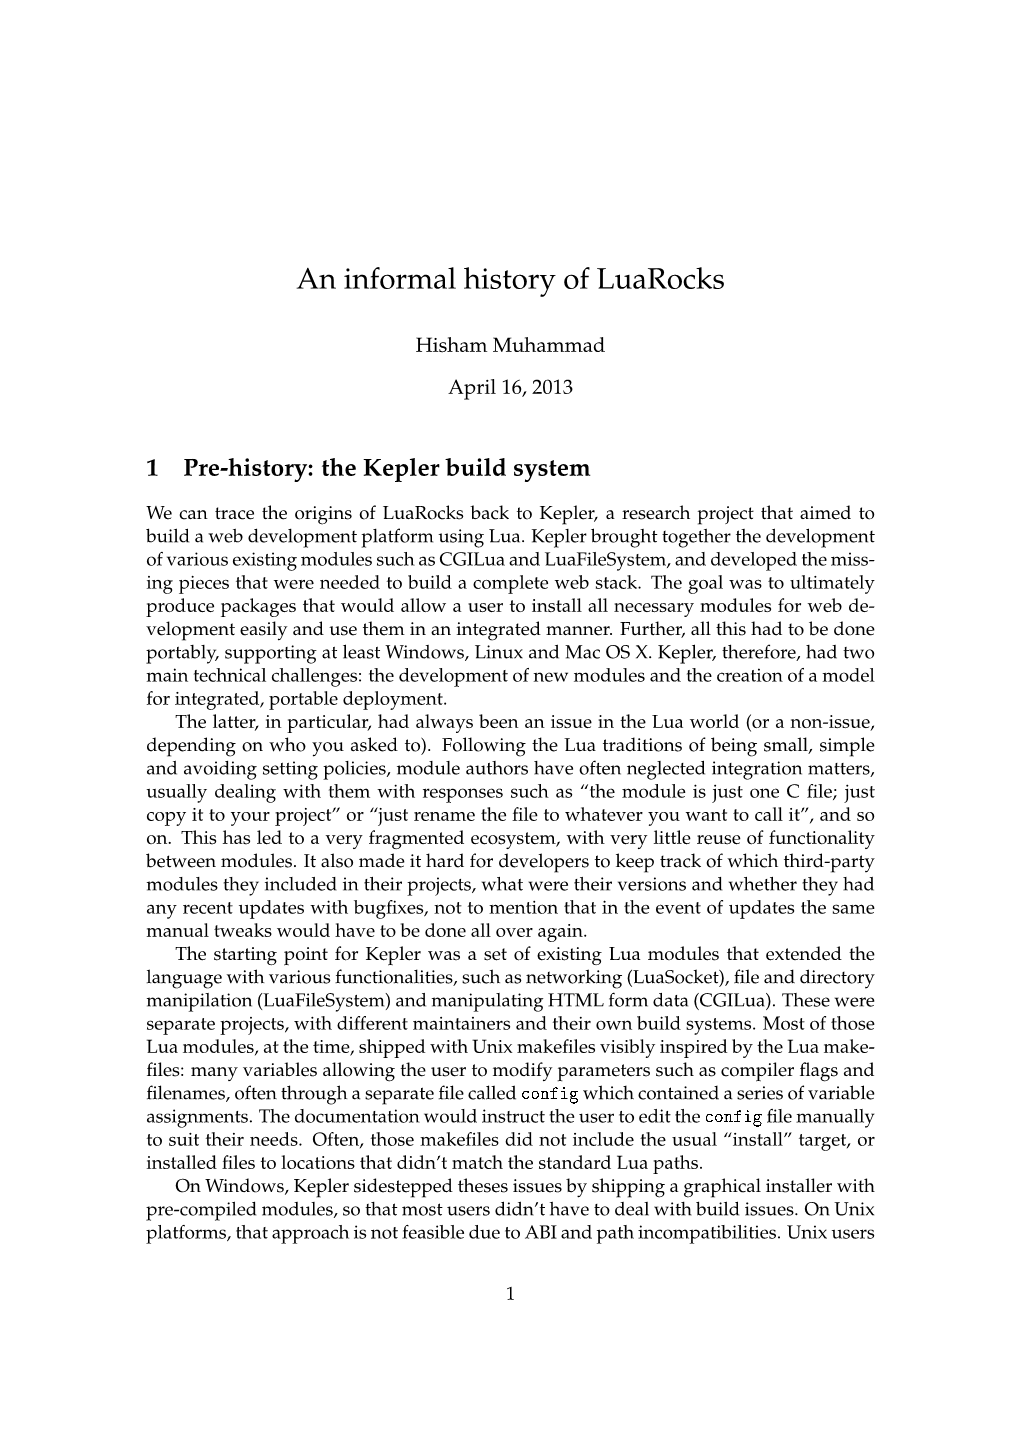 An Informal History of Luarocks